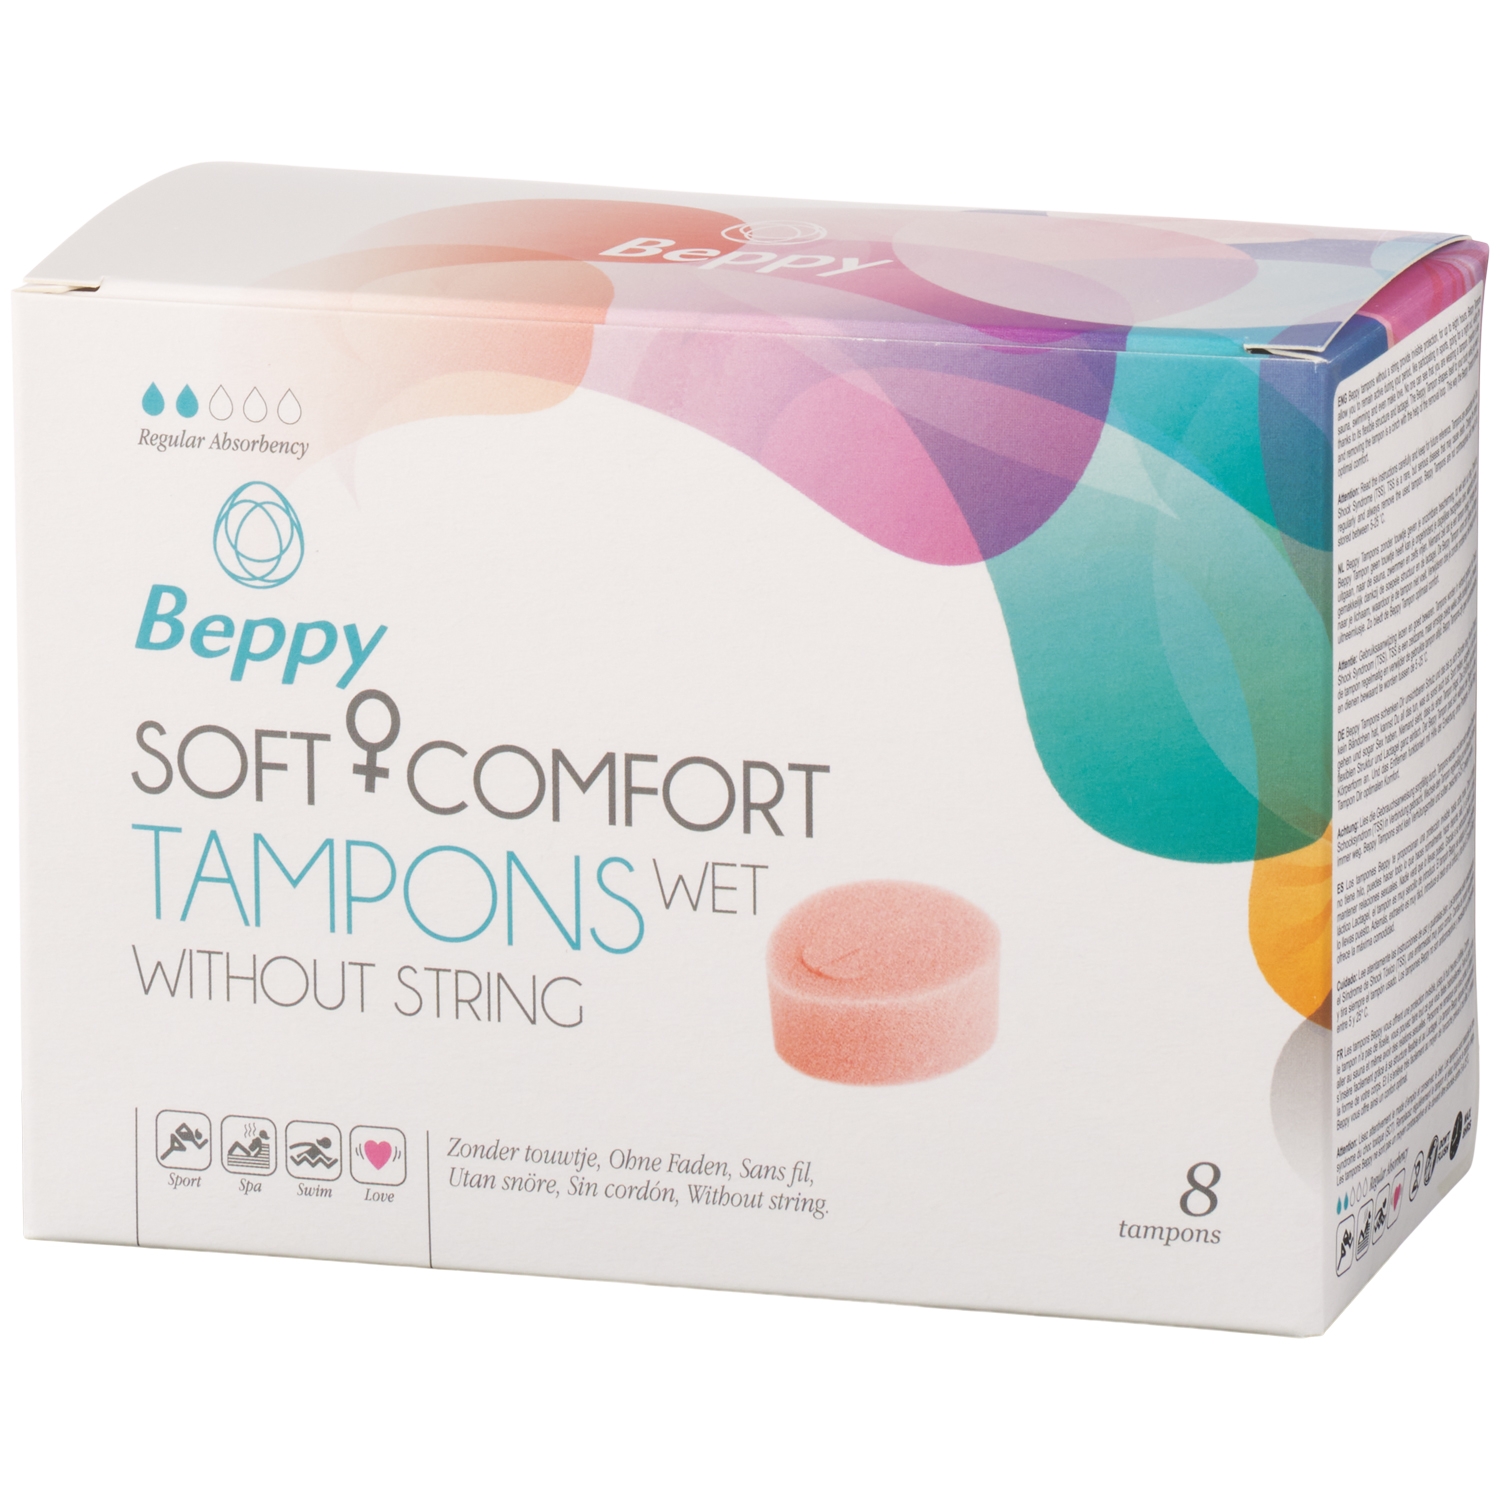 Beppy Soft + Comfort Tampons Wet 8 pcs - Pink thumbnail